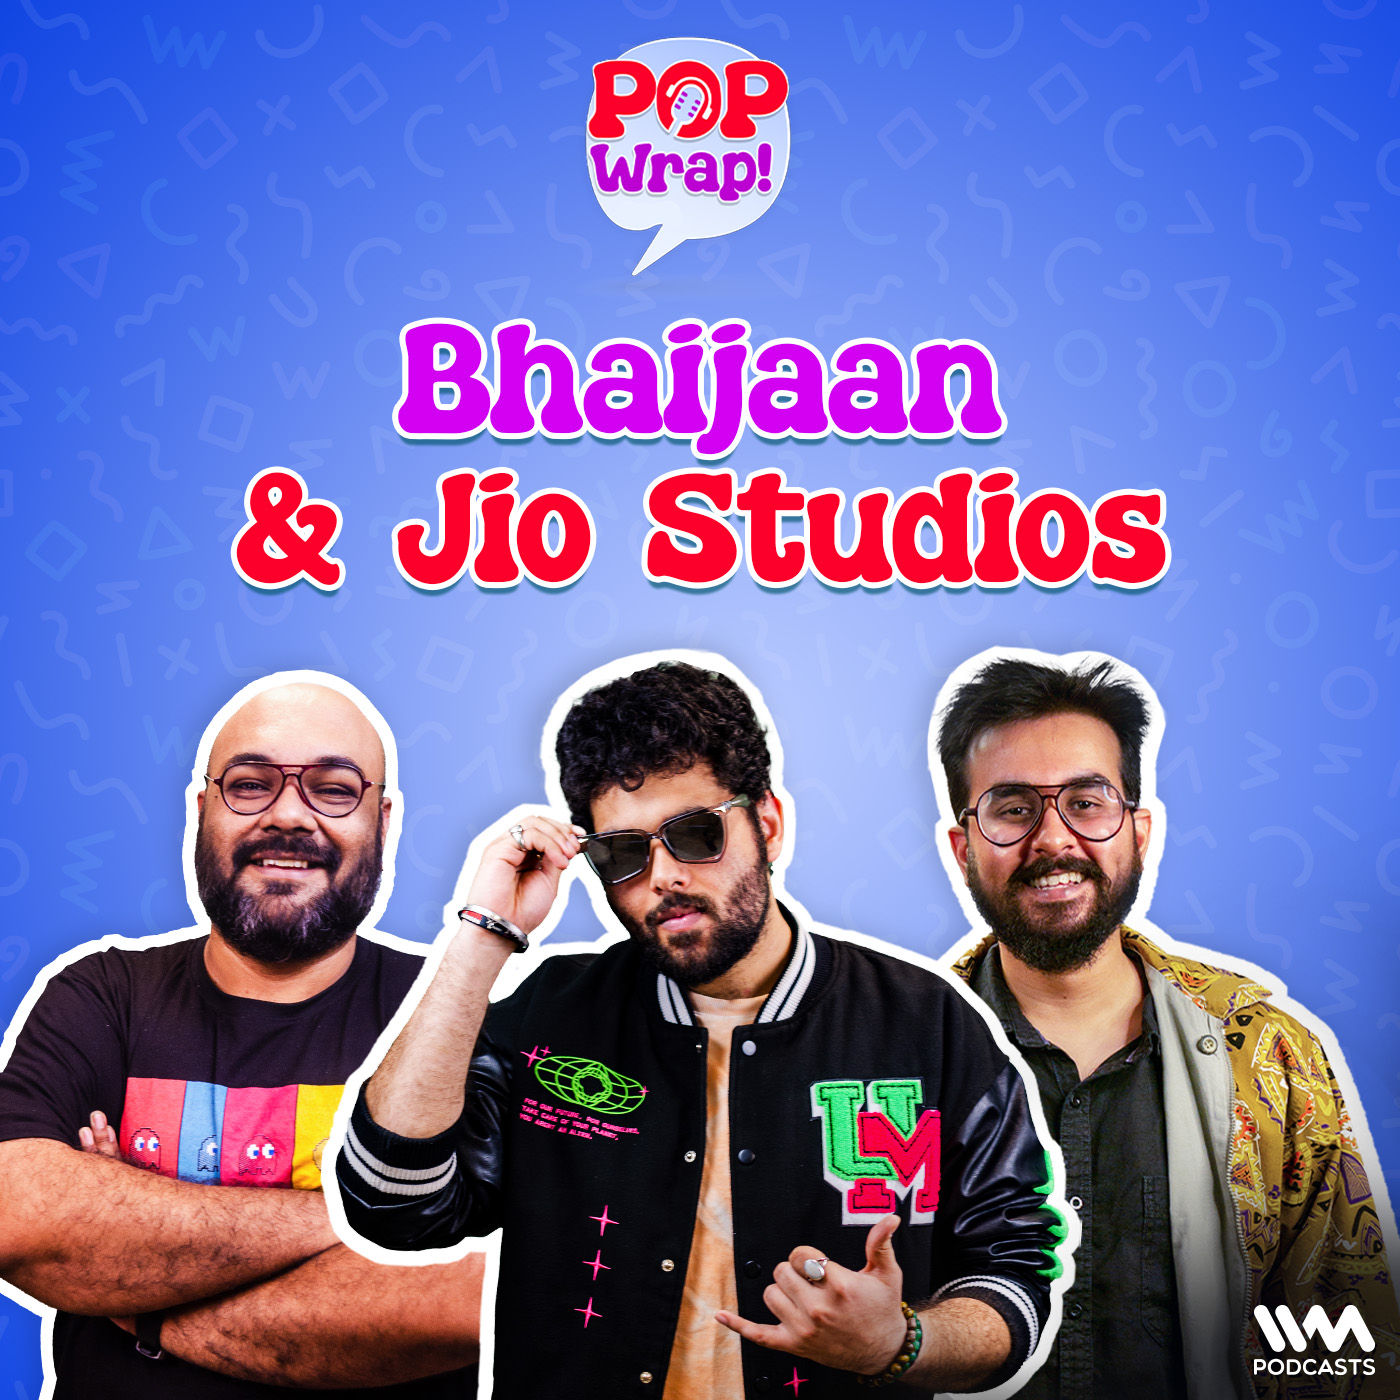 Salman Bhai is back & Jio studios' Announcements | Pop Wrap!